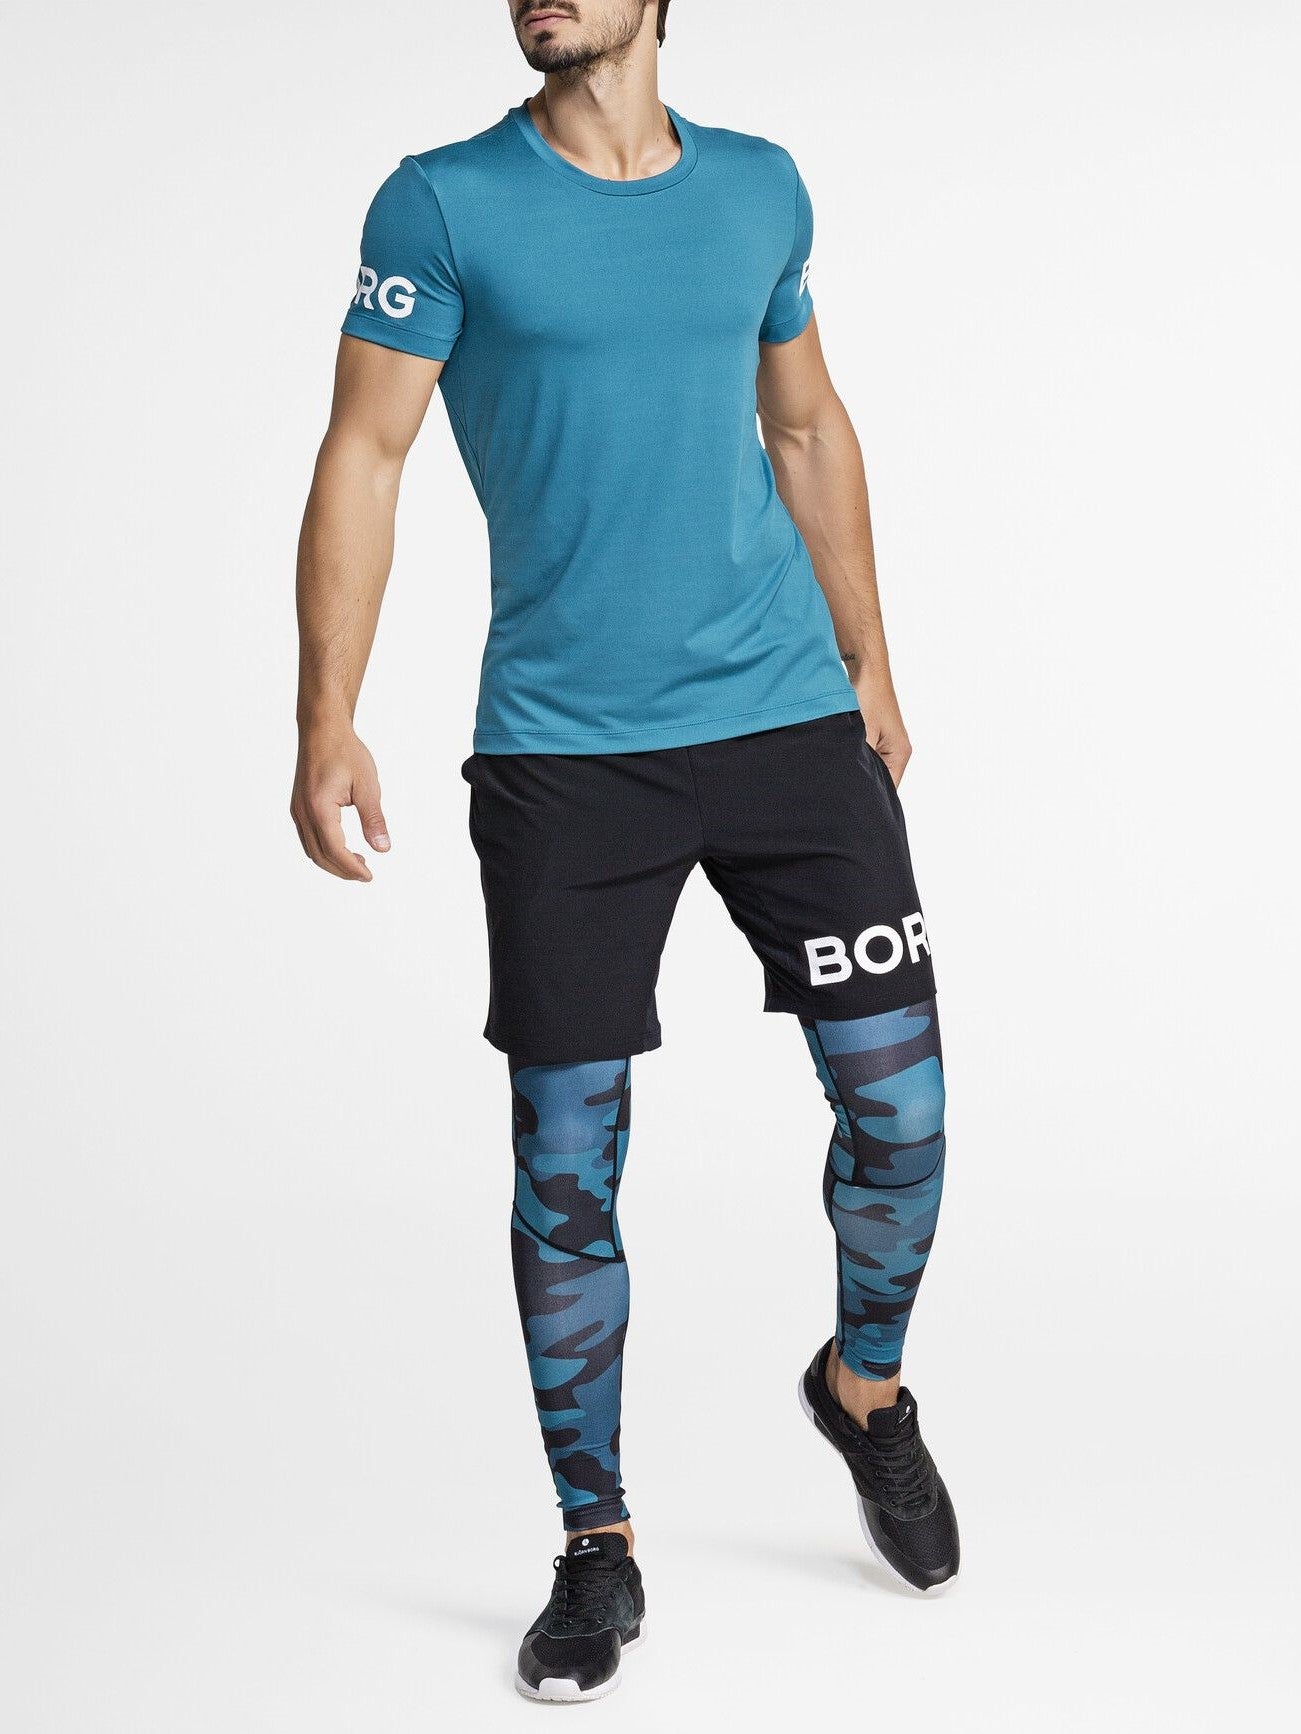 BJORN BORG Training Tee Men's Short Sleeve Gym T-Shirt Corsair Blue - Activemen Clothing